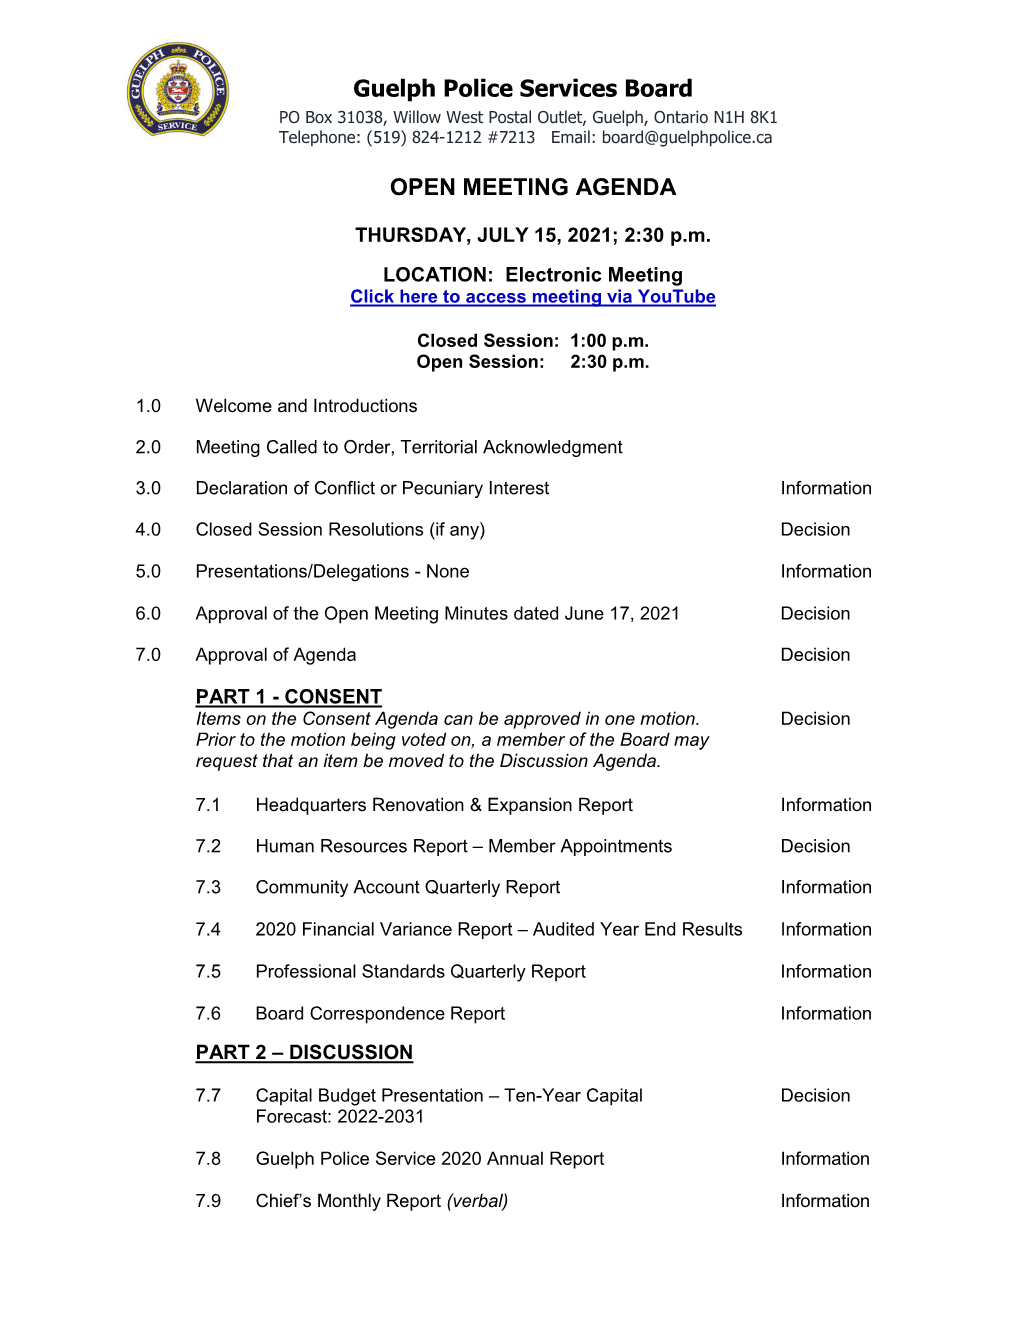 Gpsb Open Meeting Agenda July 15, 2021